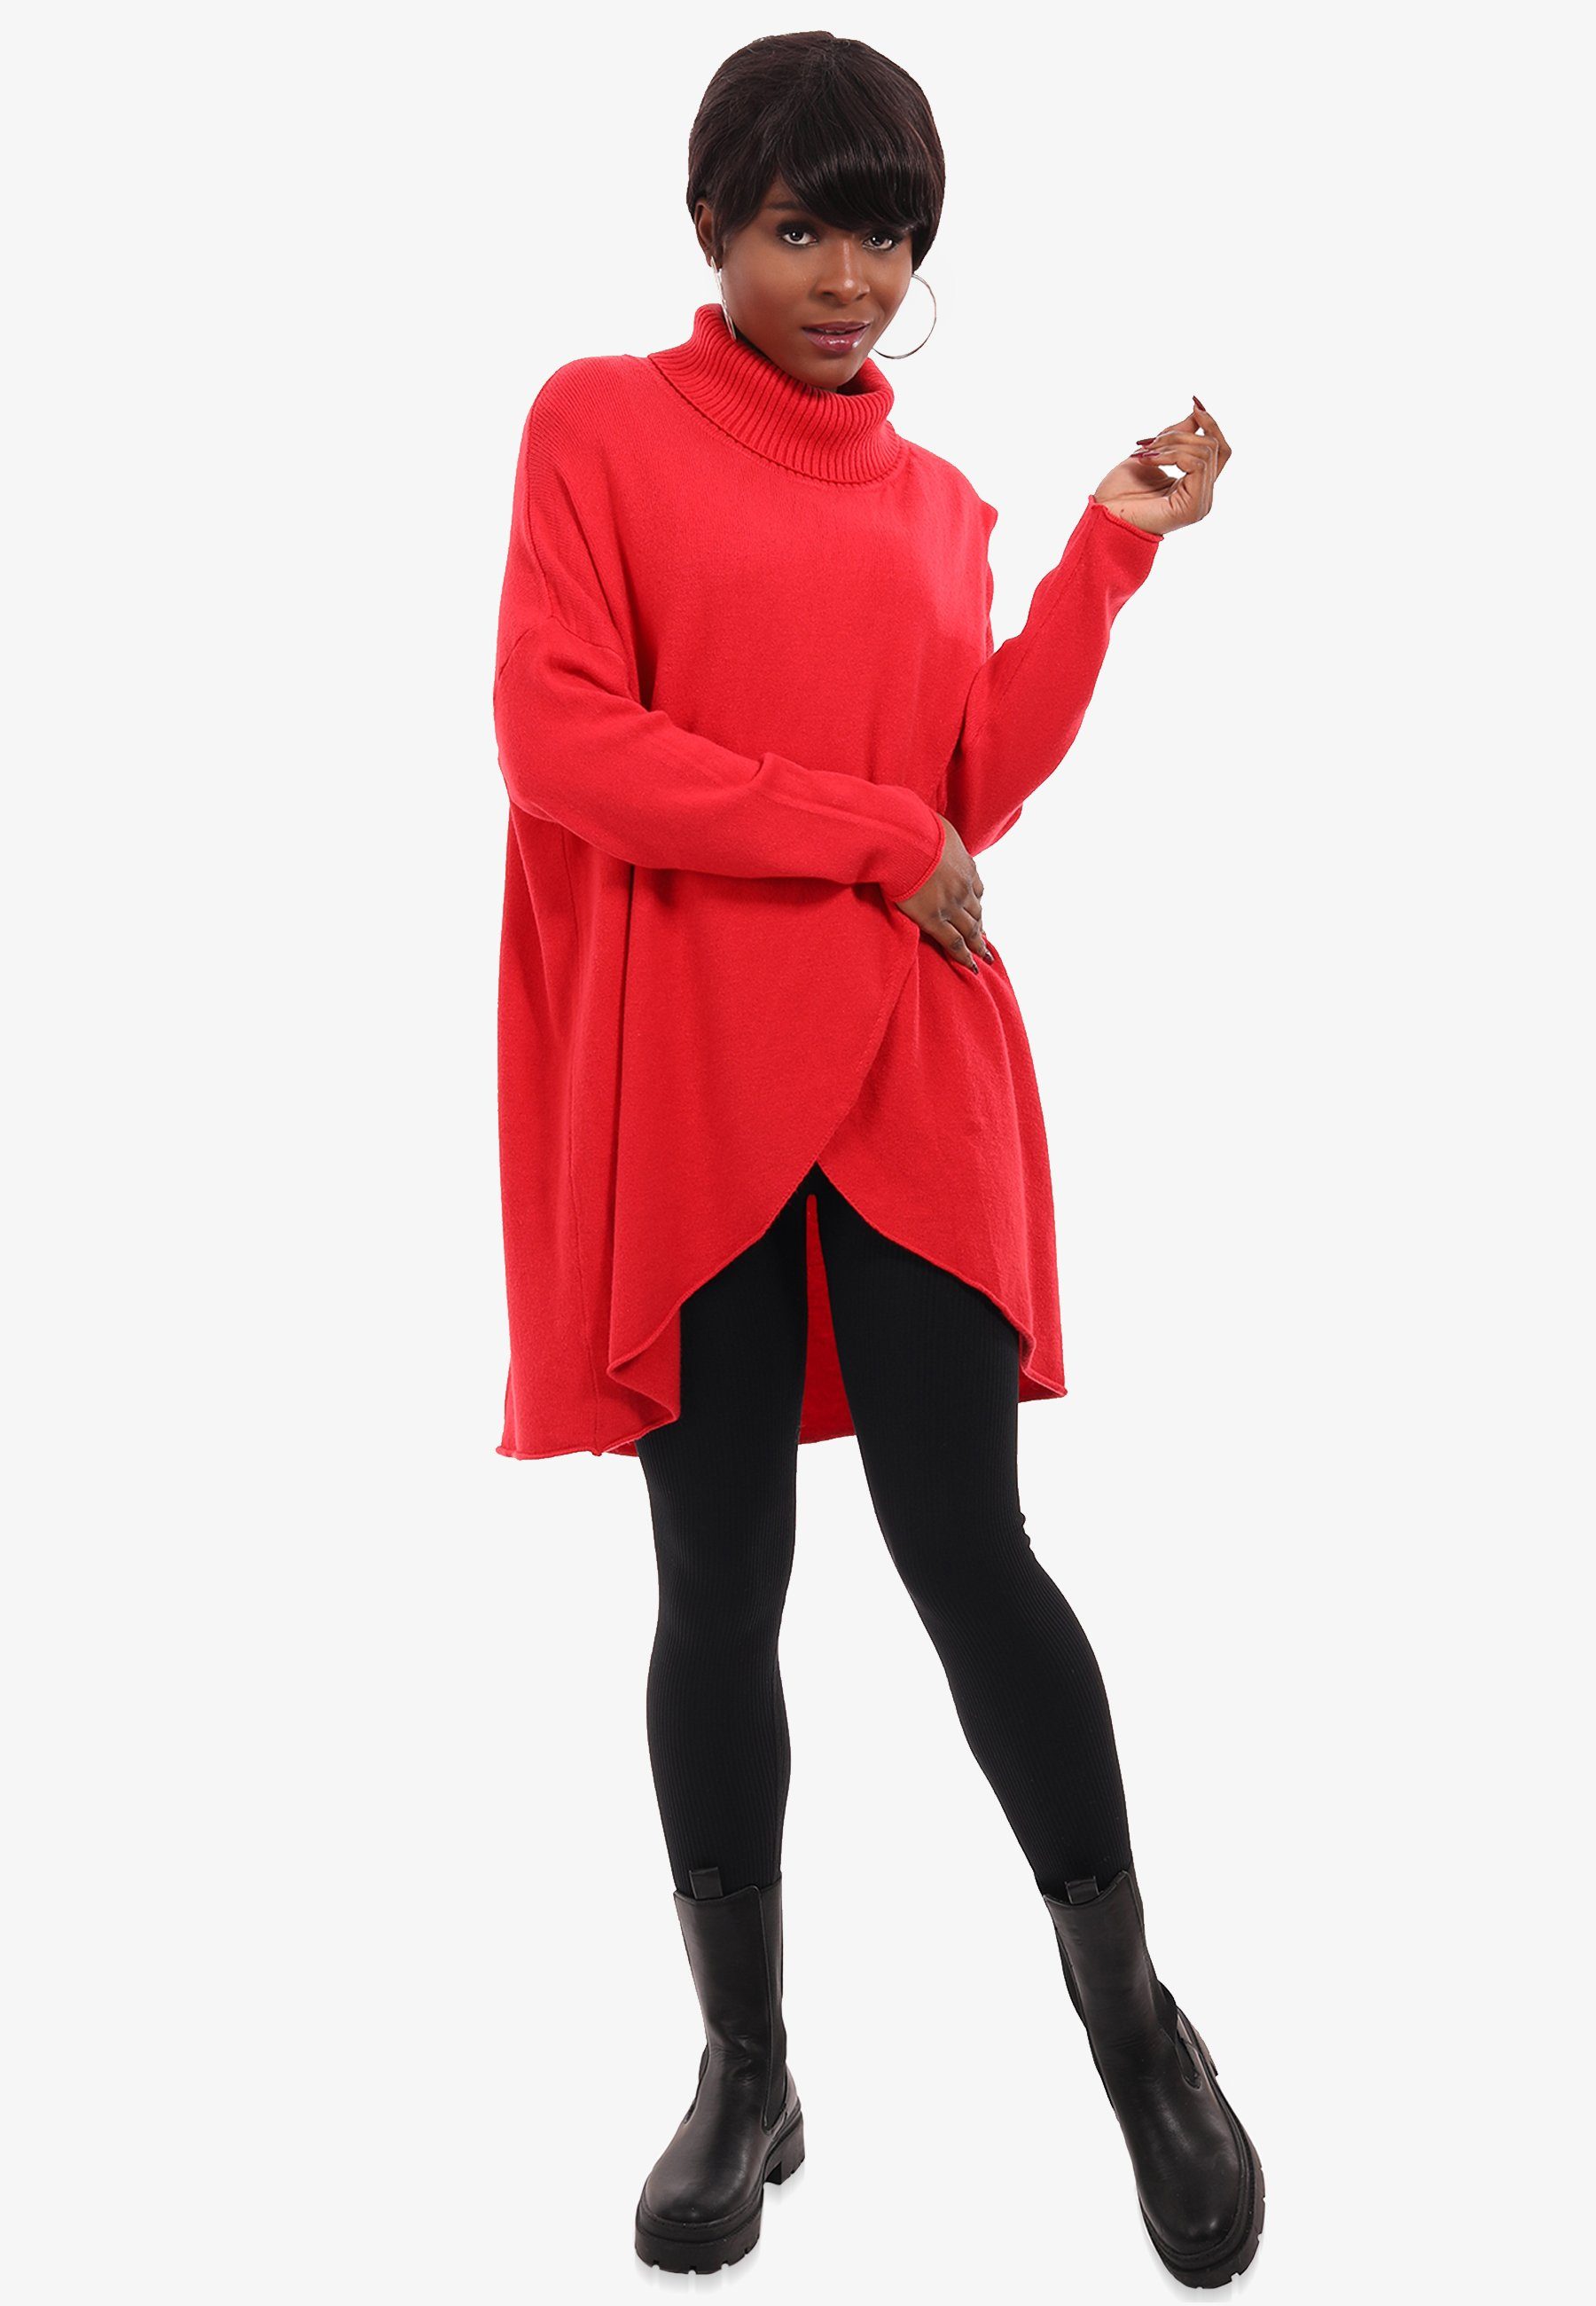 YC Fashion & Style Longpullover Unifarbe in Strickpullover Wickeloptik rot in Rollkragen mit